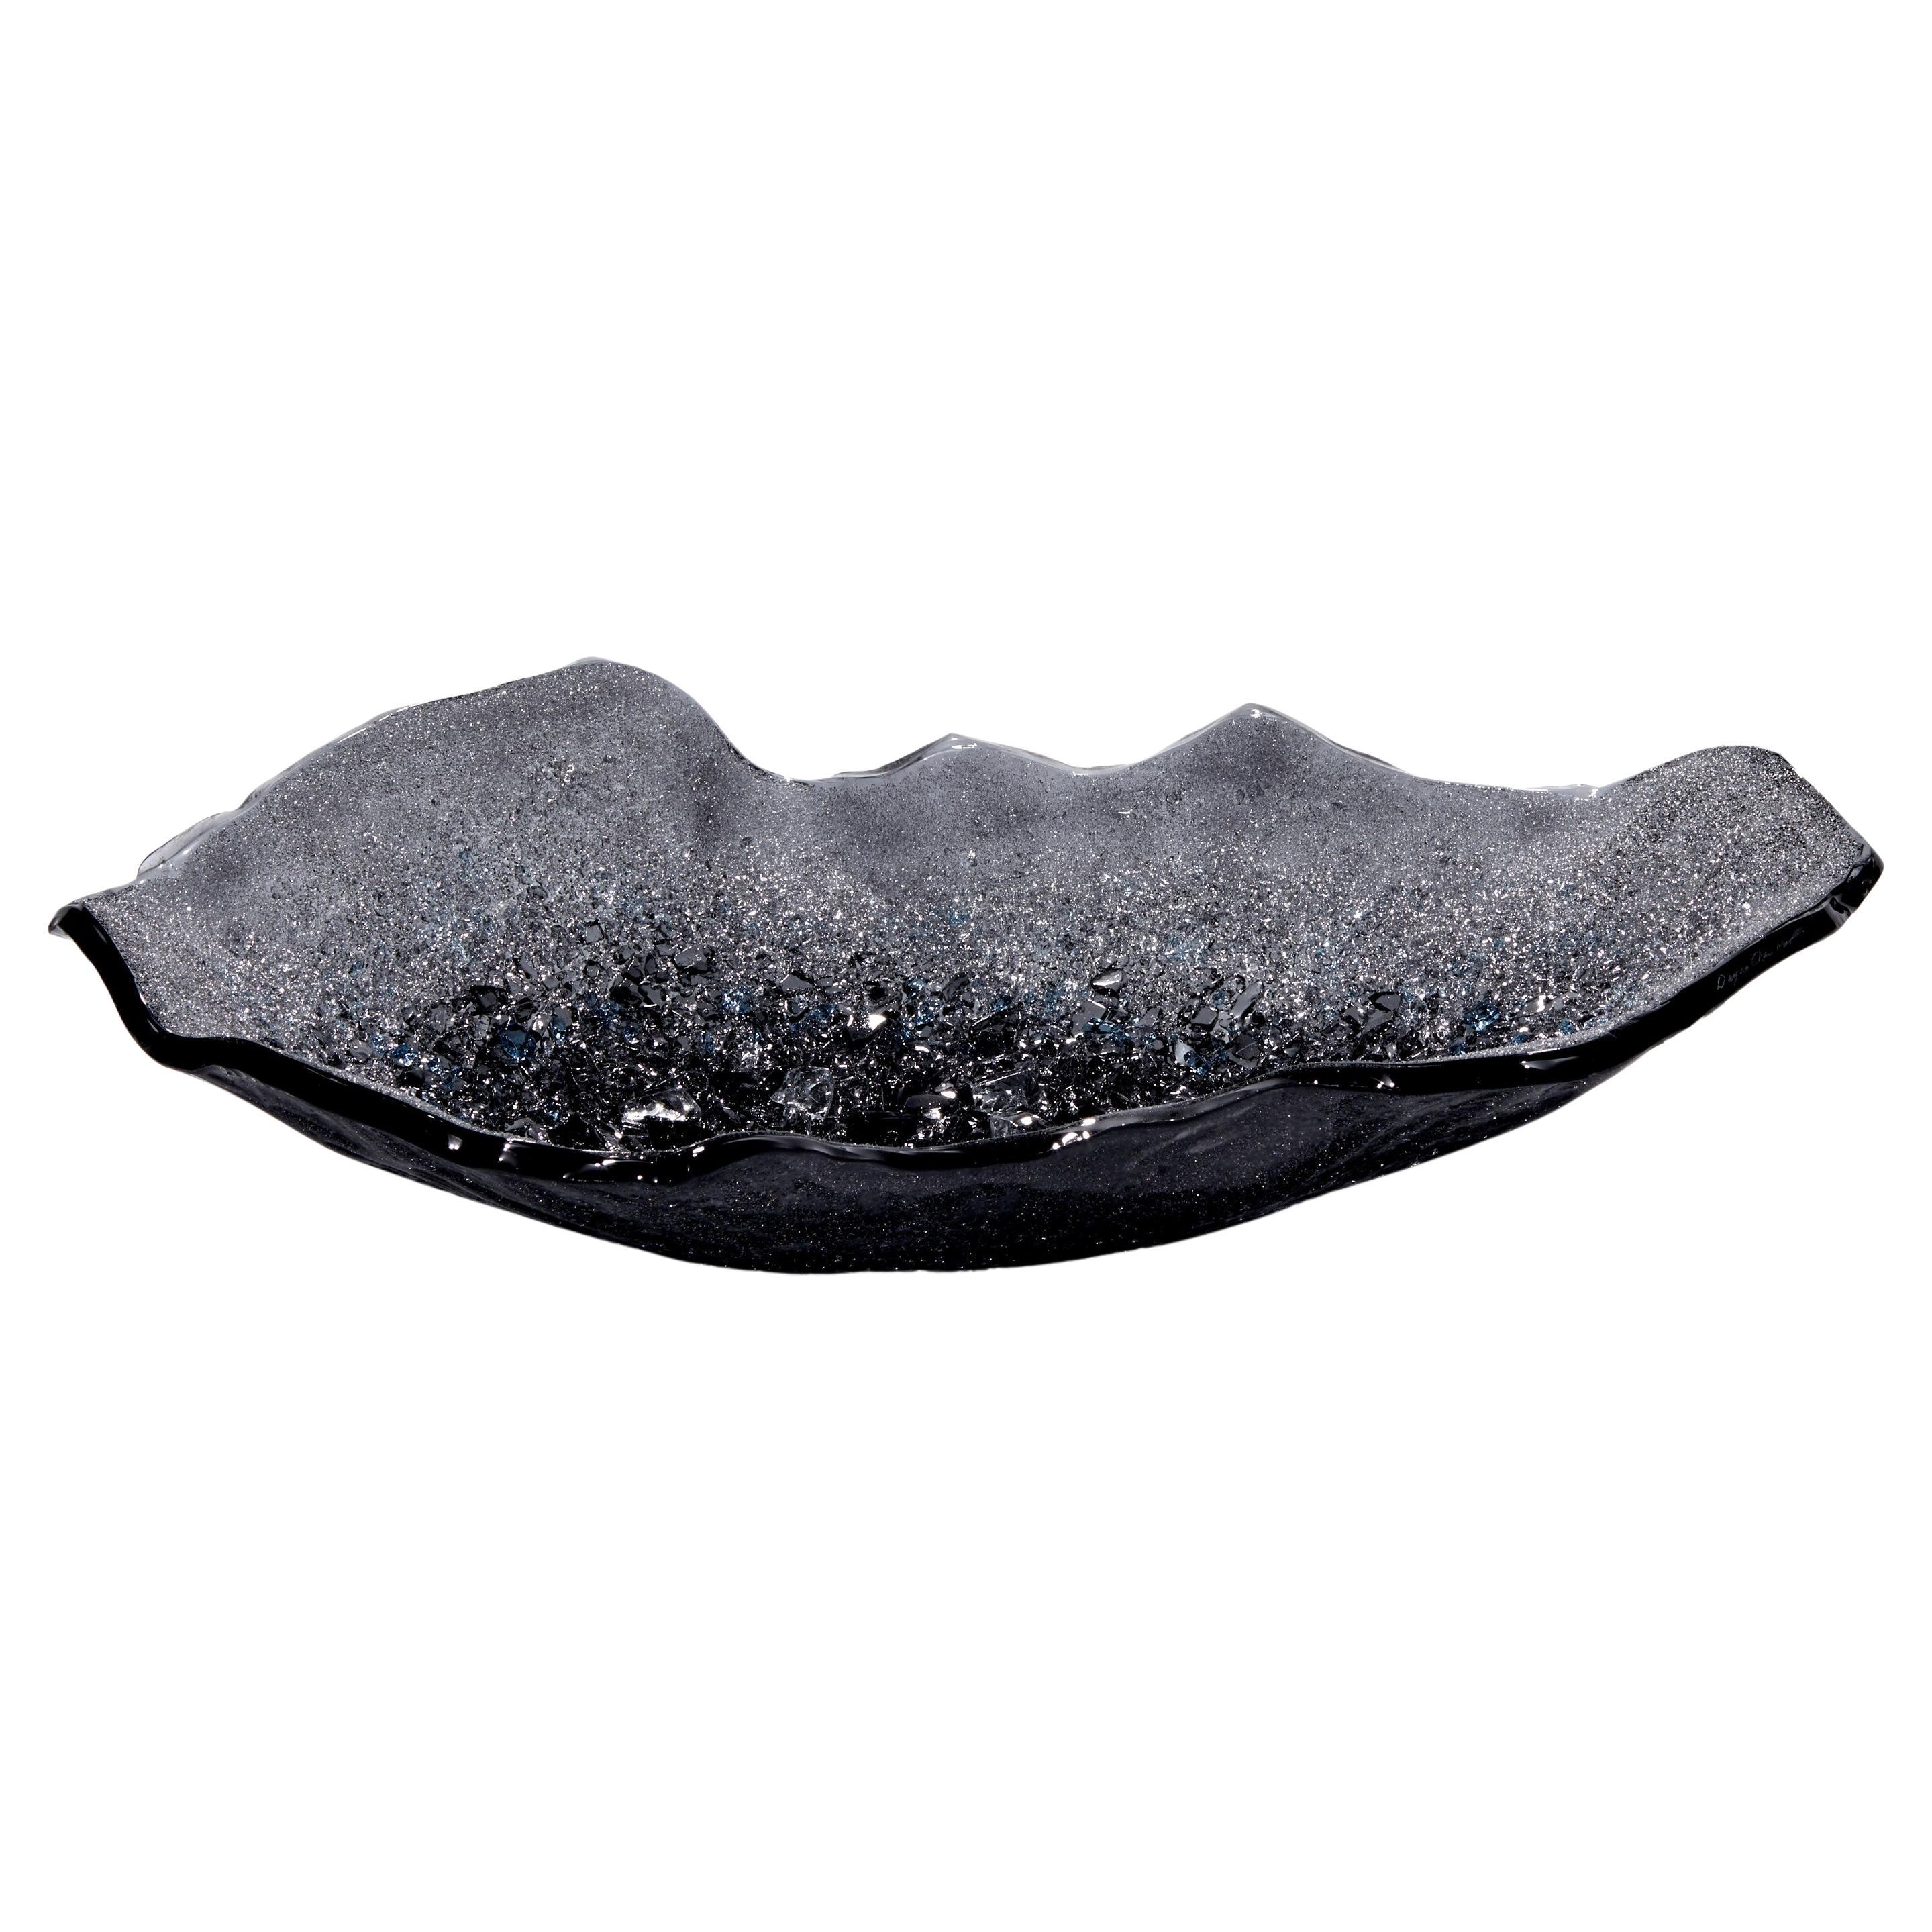 Celestine V, black & Grey Sparkly Glass Sculptural Centrepiece by Wayne Charmer For Sale